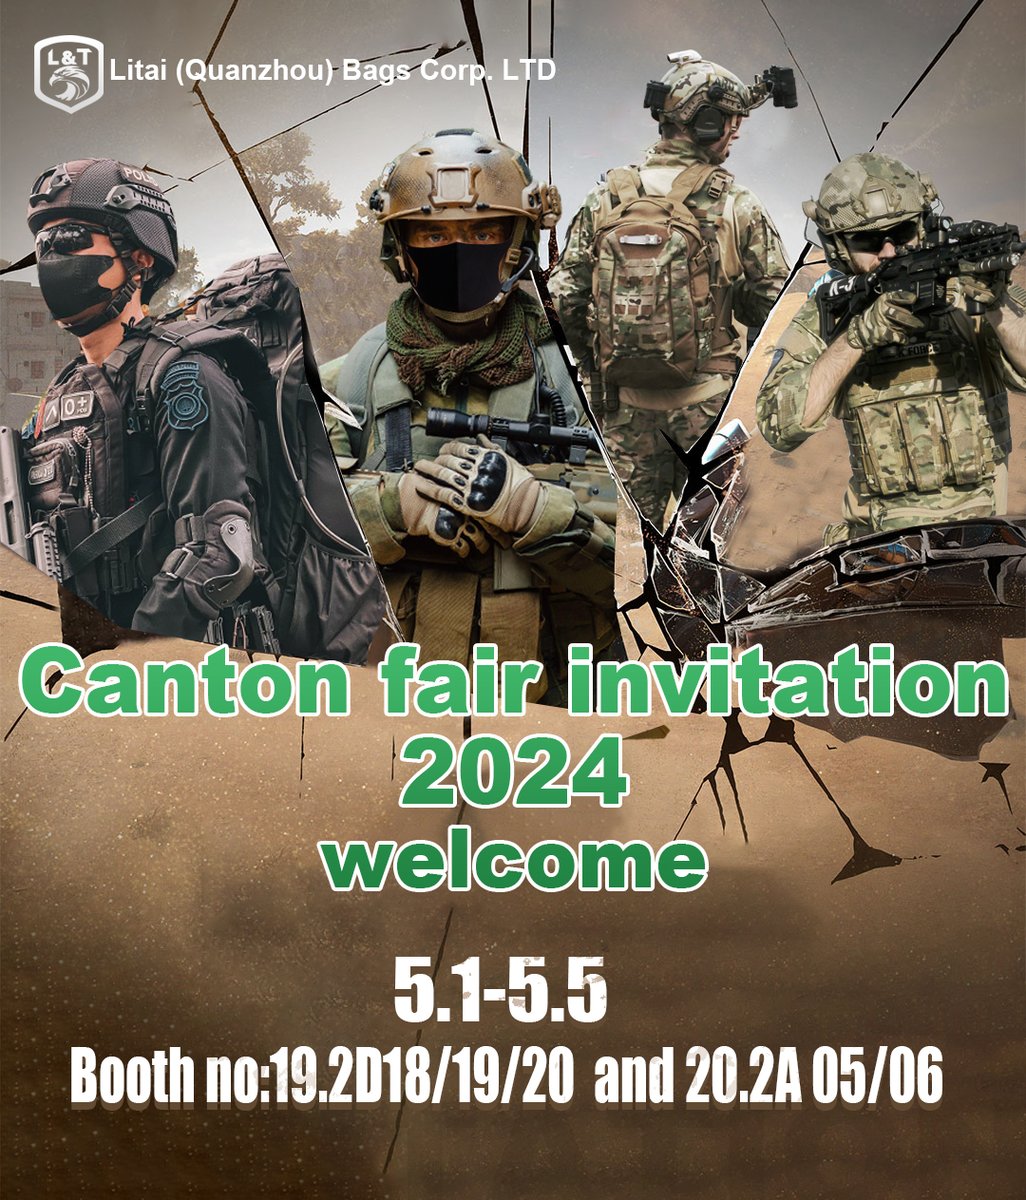 I look forward to meeting you at the Canton Fair #tacticalgear #tacticalbackpack #Tacticalvest #exhibition #OEM #ODM #CantonFair2024 #cantonfair